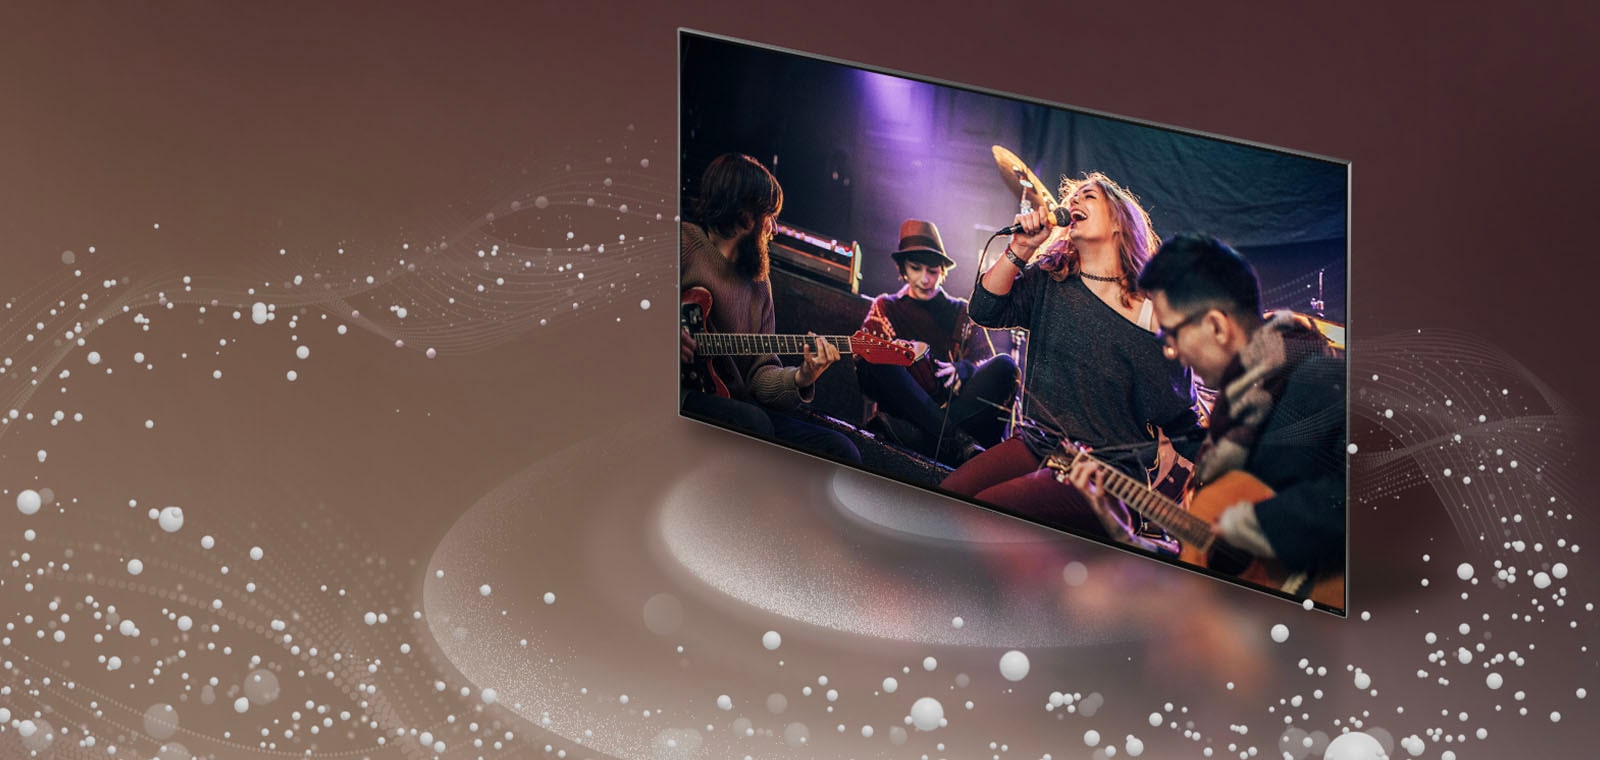 LG TV มีลักษณะเป็นฟองเสียงและคลื่นที่เปล่งออกมาจากหน้าจอและเติมเต็มพื้นที่